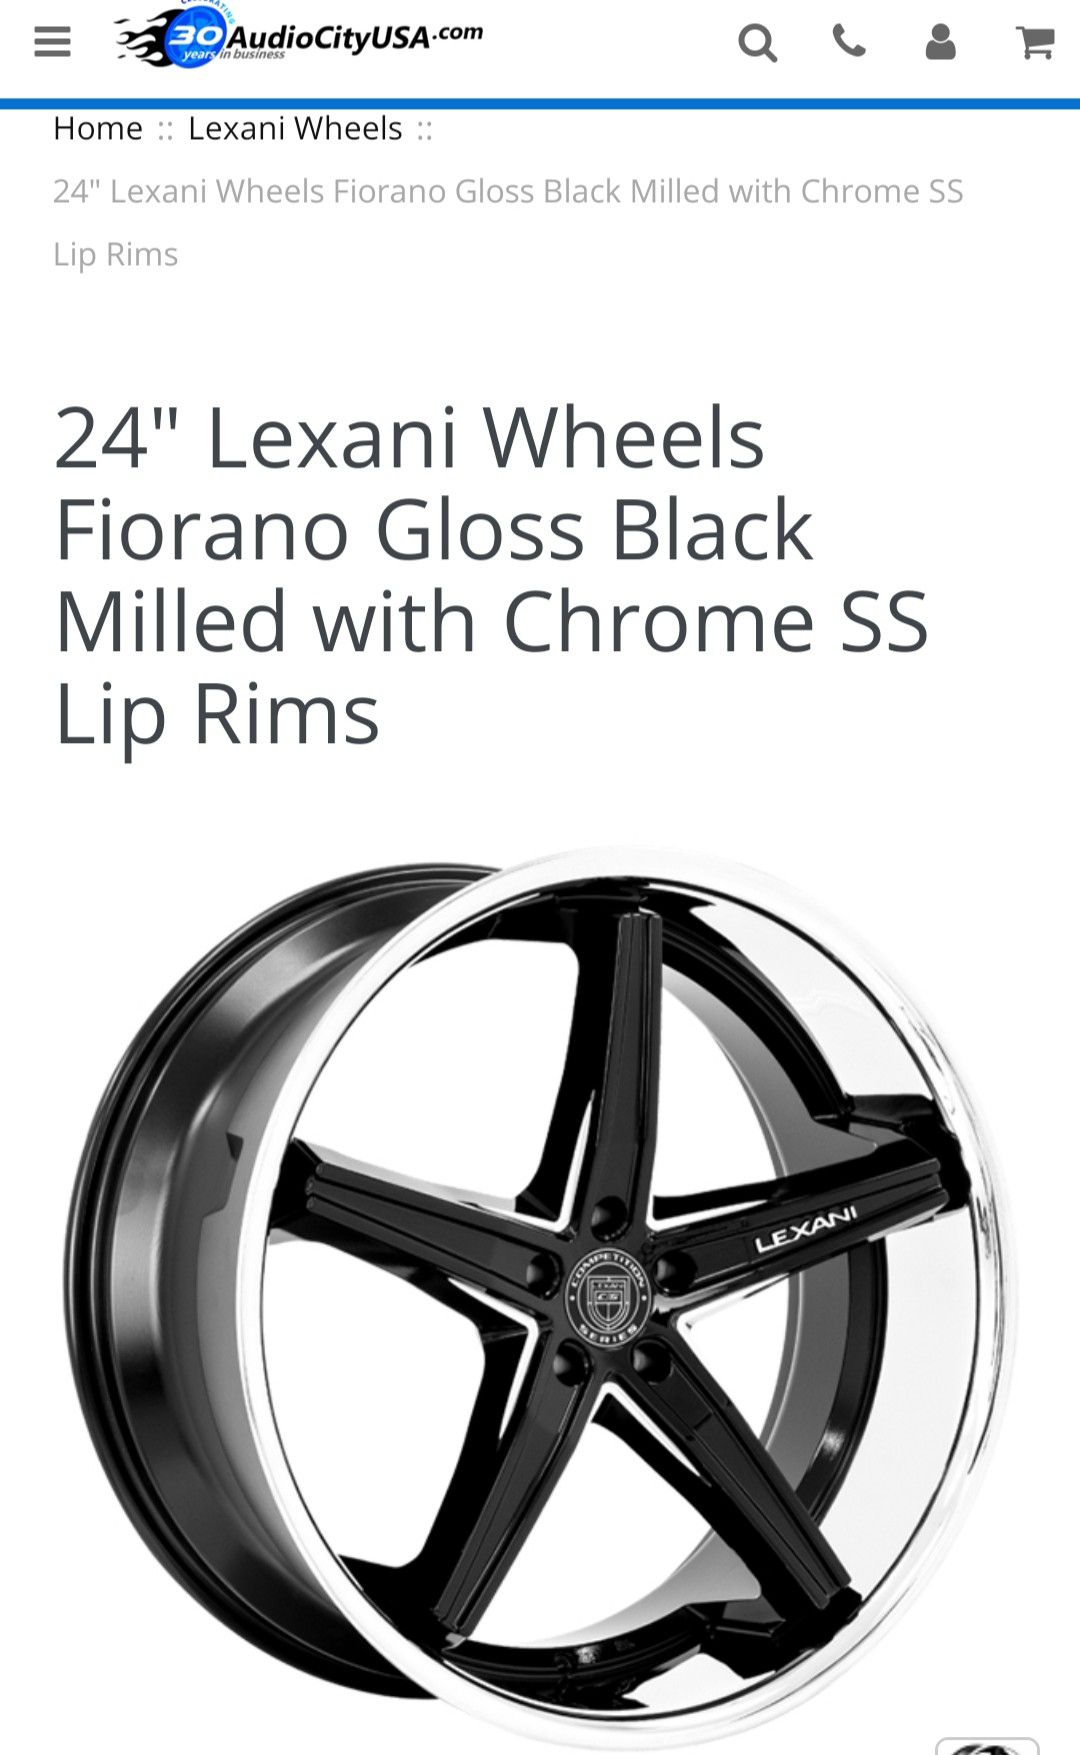 24" Lexani Wheels Fiorano Gloss Black Milled with Chrome SS Lip Rims